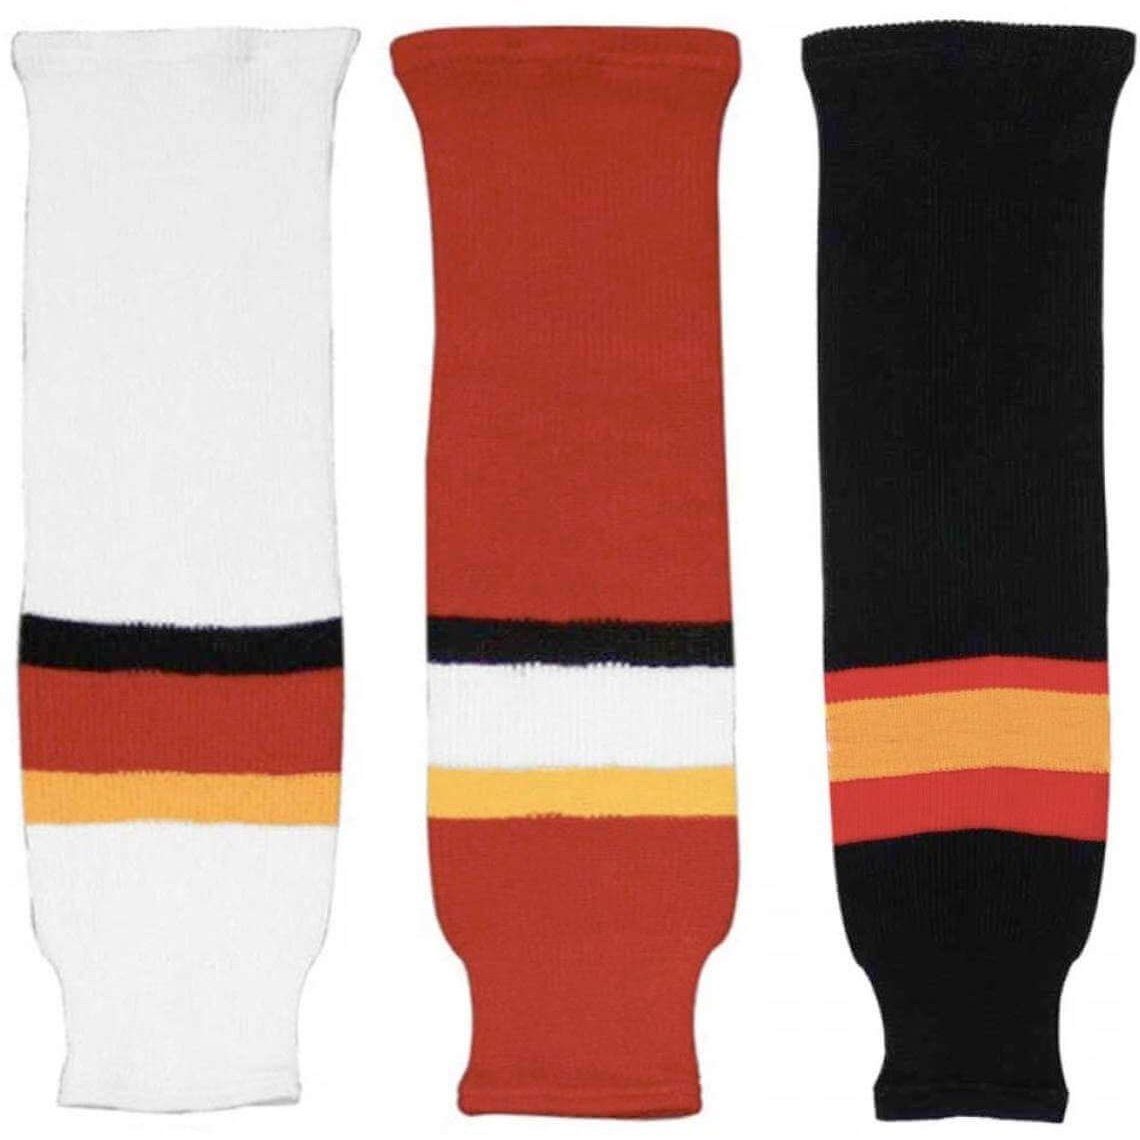 Calgary Flames Knitted Hockey Socks - Senior